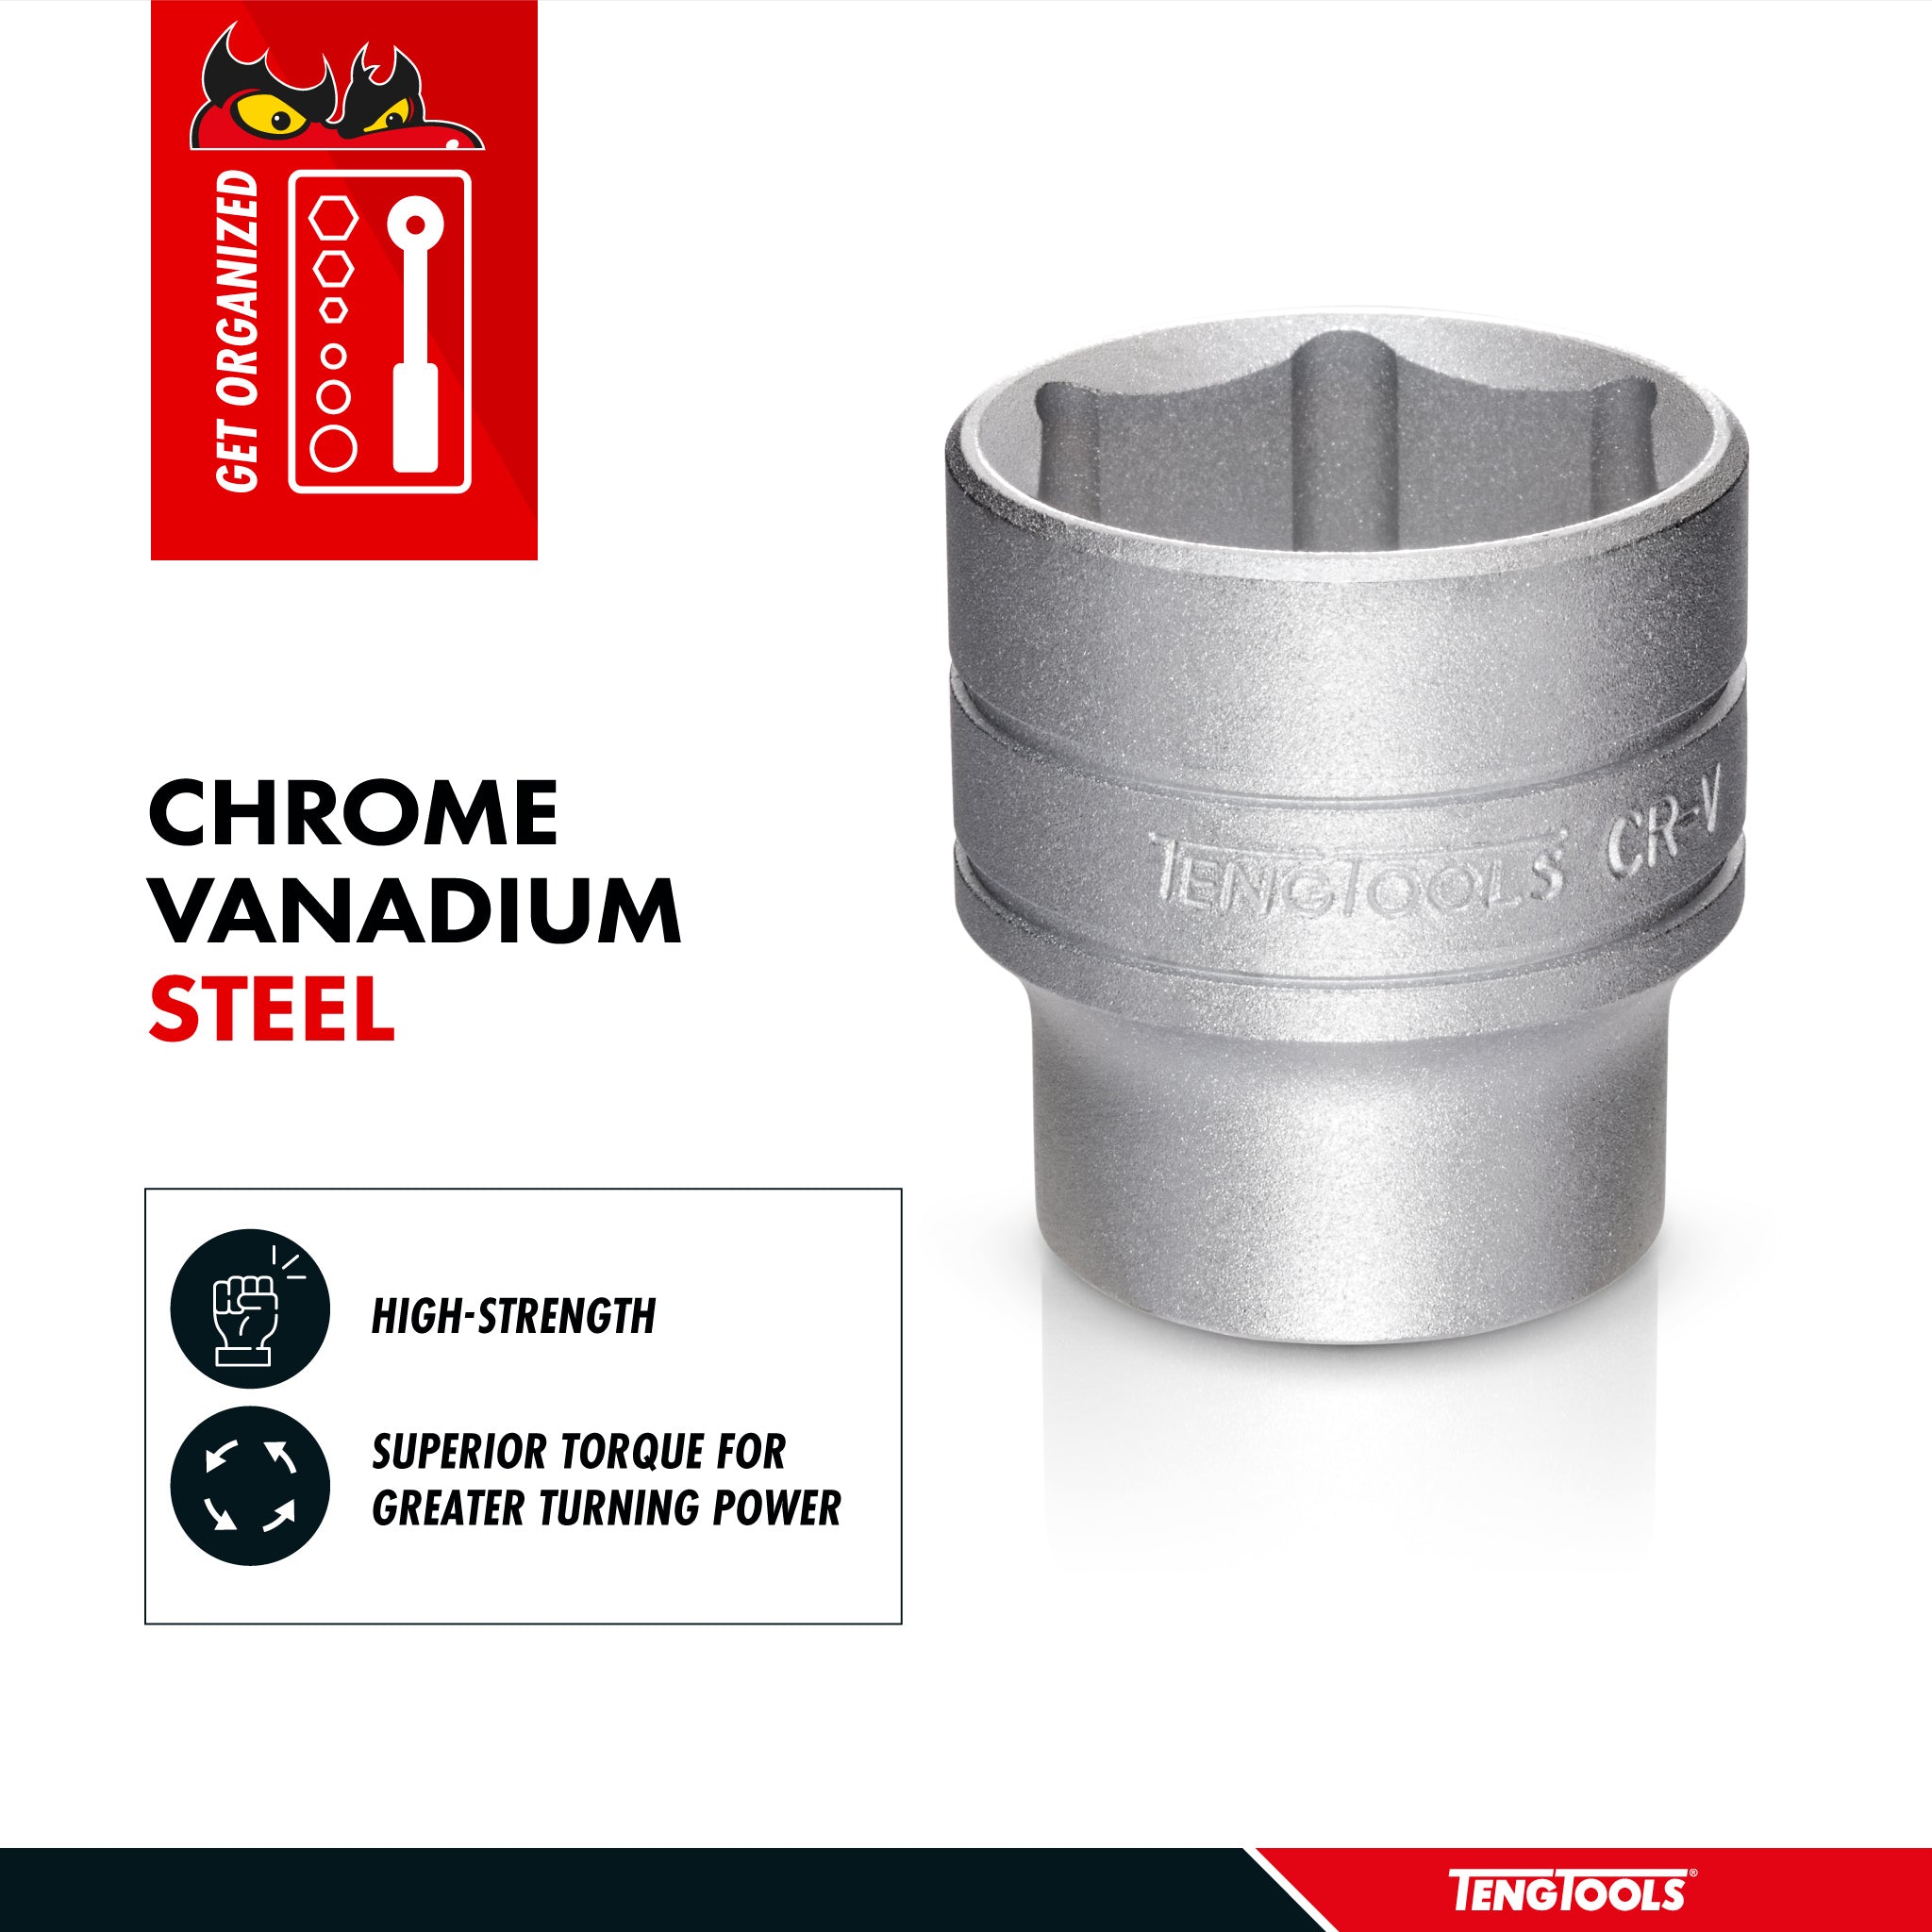 Teng Tools 6 Point SAE Shallow 3/8 Inch Drive Chrome Vanadium Sockets - 5/8